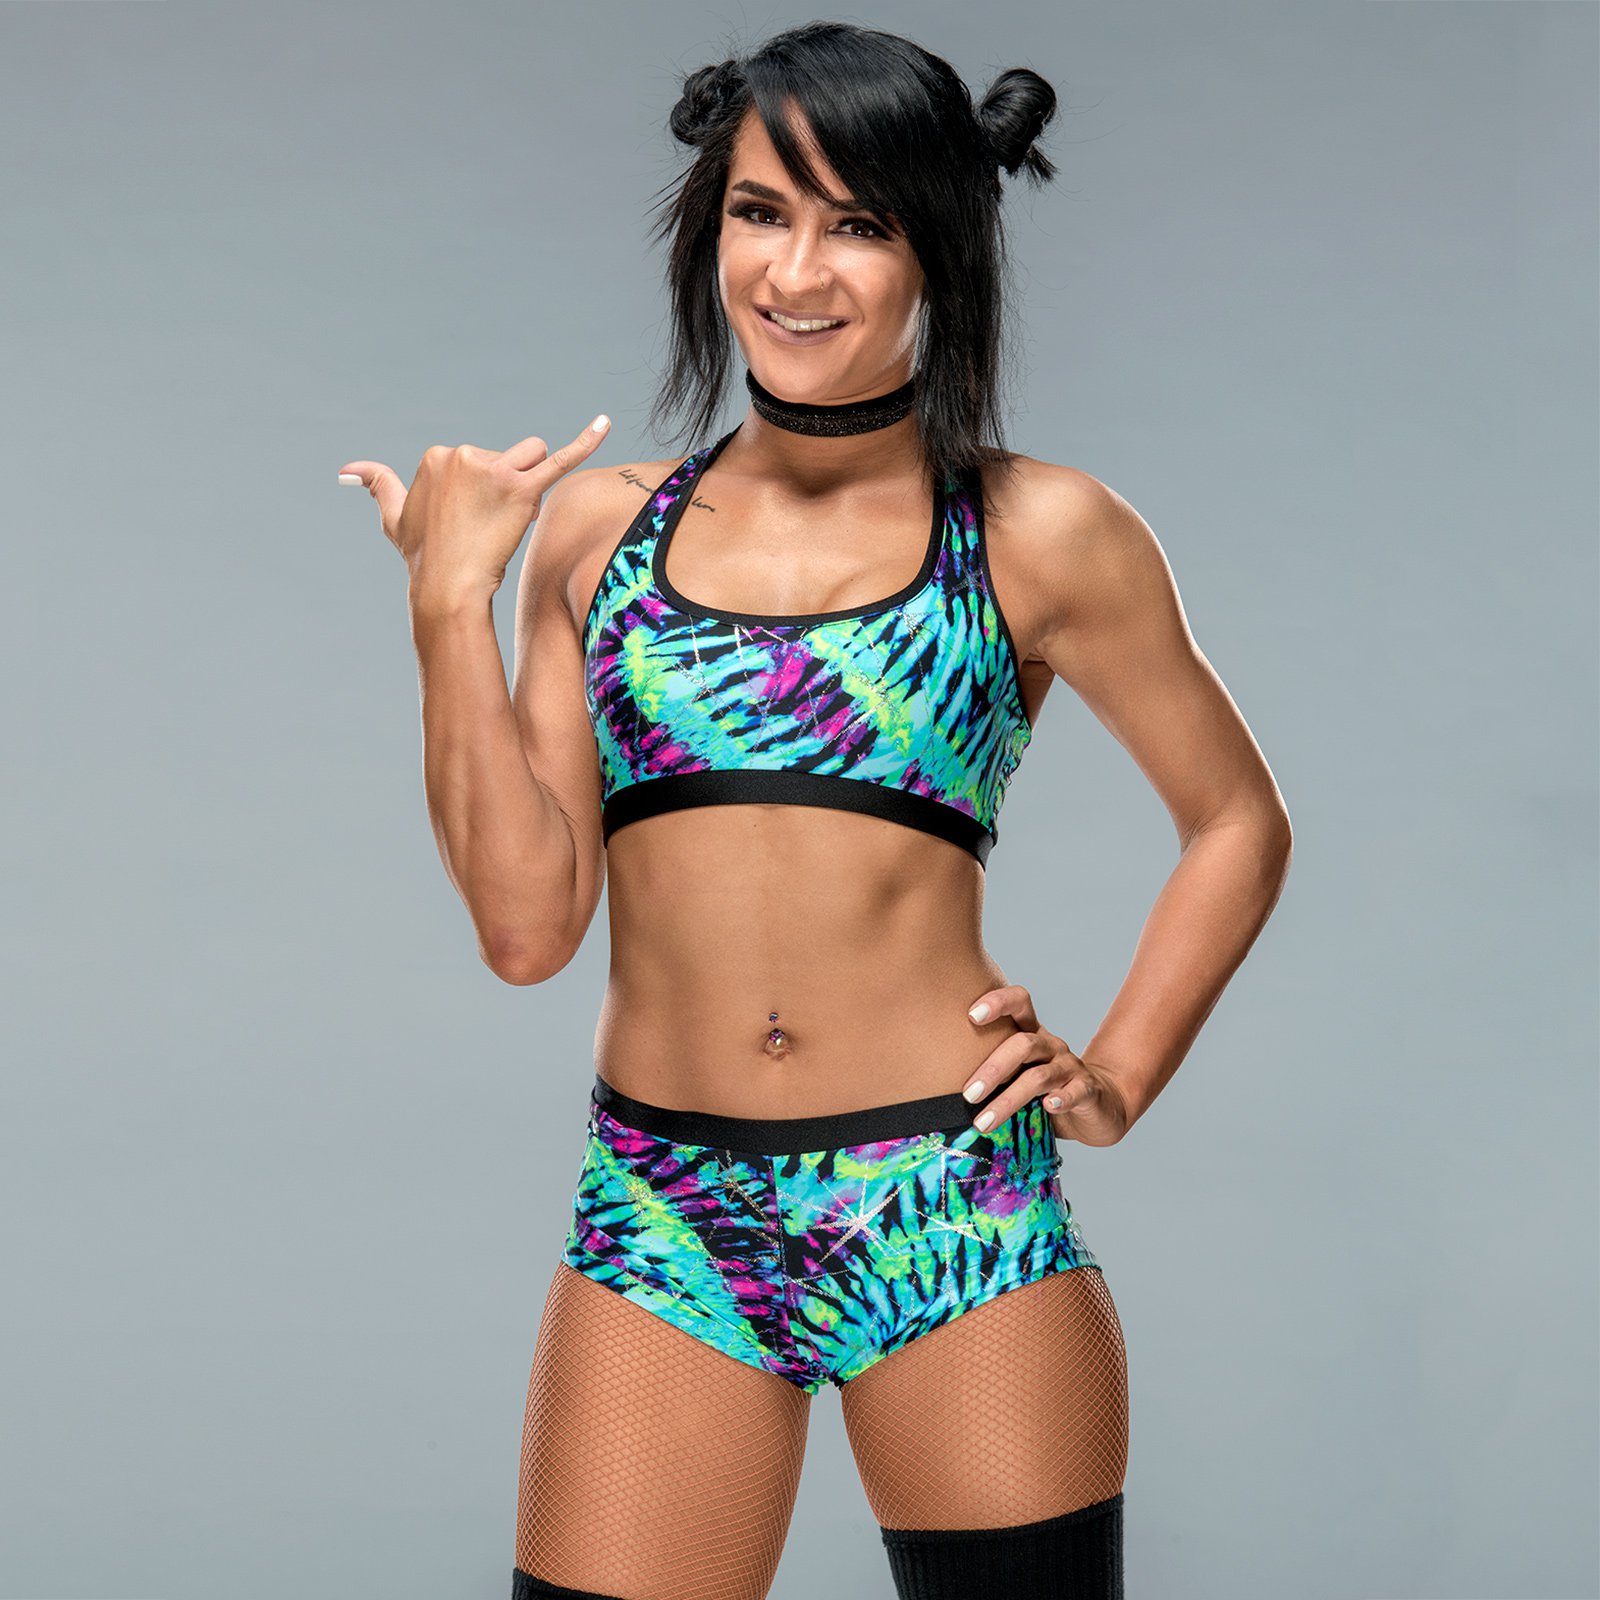 Female Pro Wrestling WWE NXT Divas International